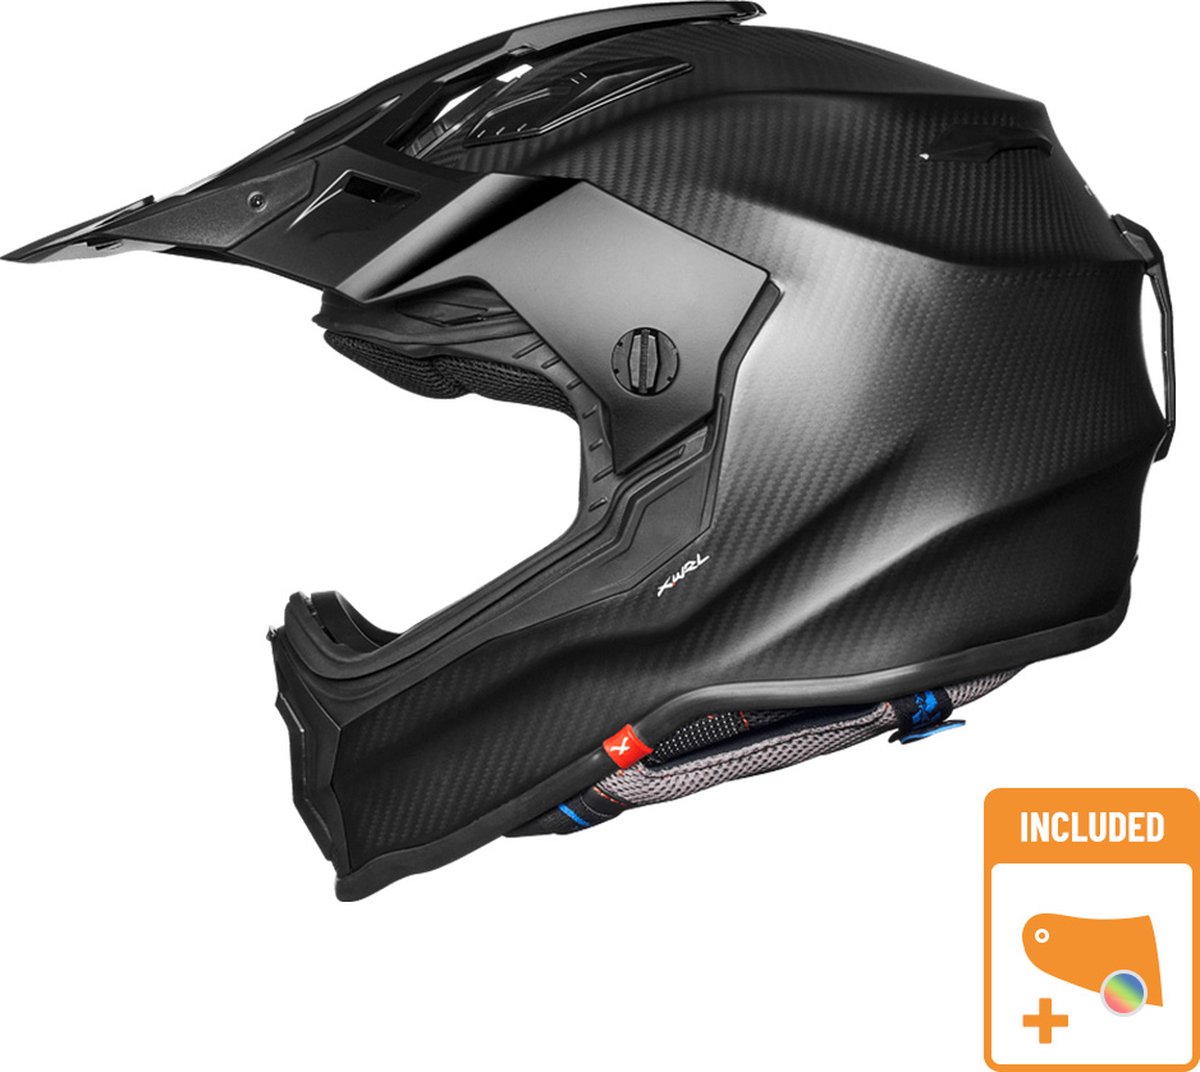 Nexx X.Wrl Zero Pro Carbon Matt 2XL - Maat 2XL - Helm